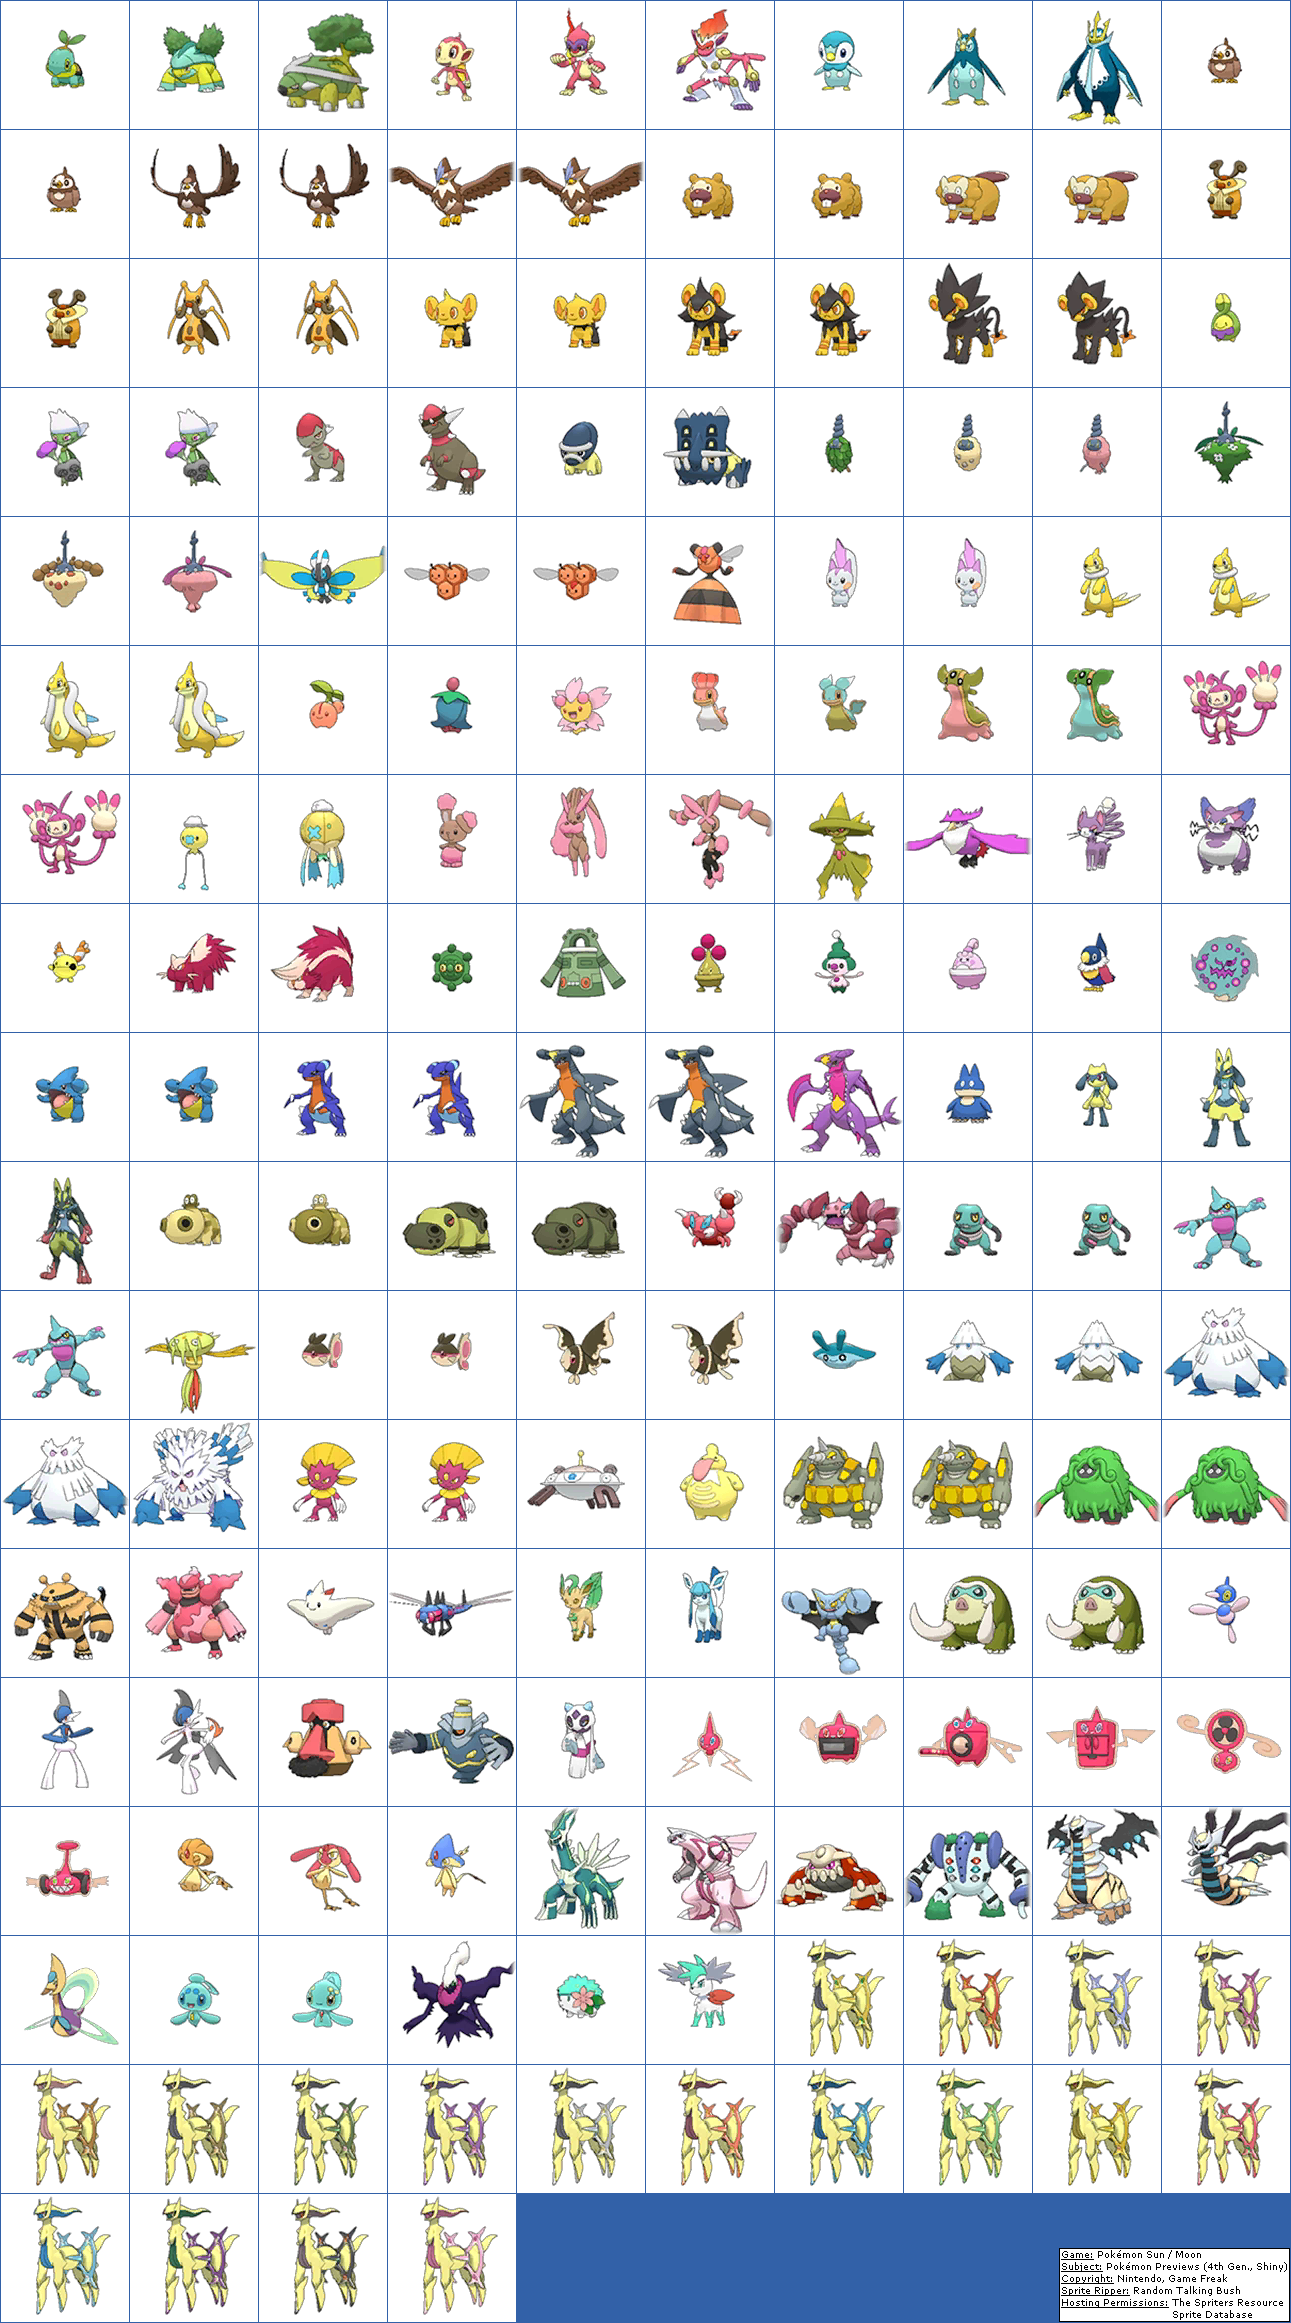 3DS - Pokémon Sun / - Pokémon (4th Generation, Shiny) - The Spriters Resource